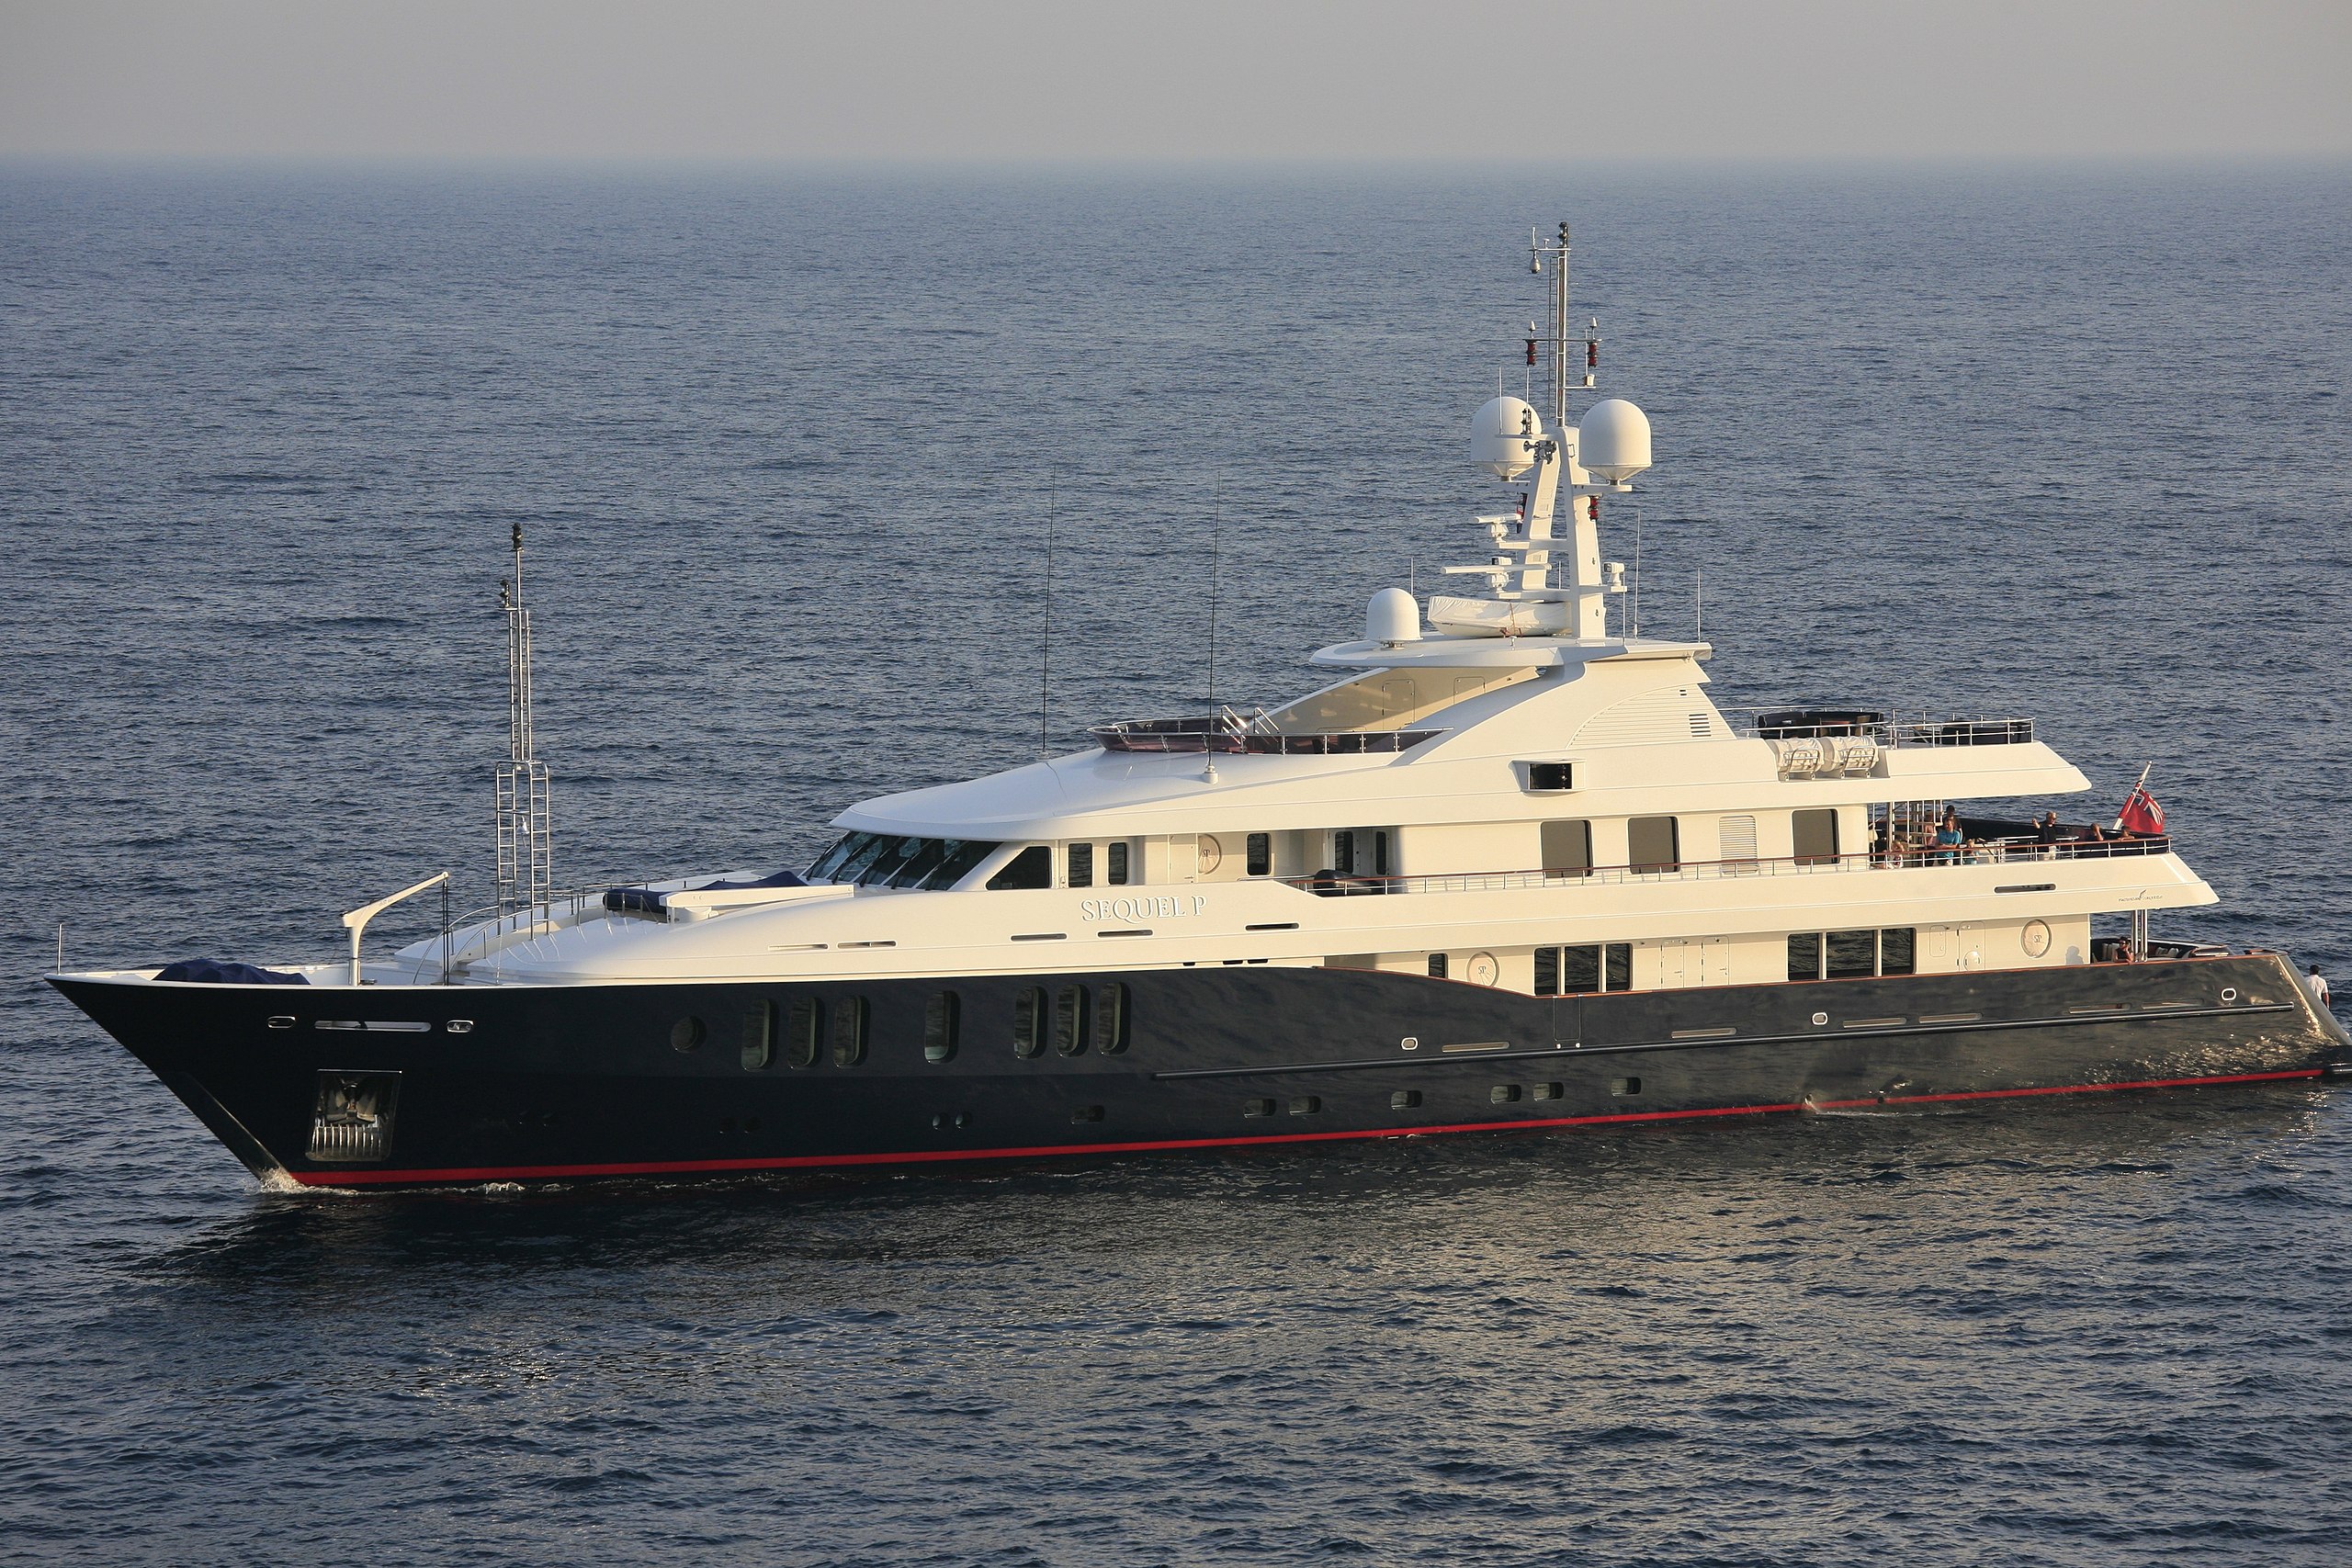 2560px-Luxury_Motor_Yacht_Sequel_P_%2859